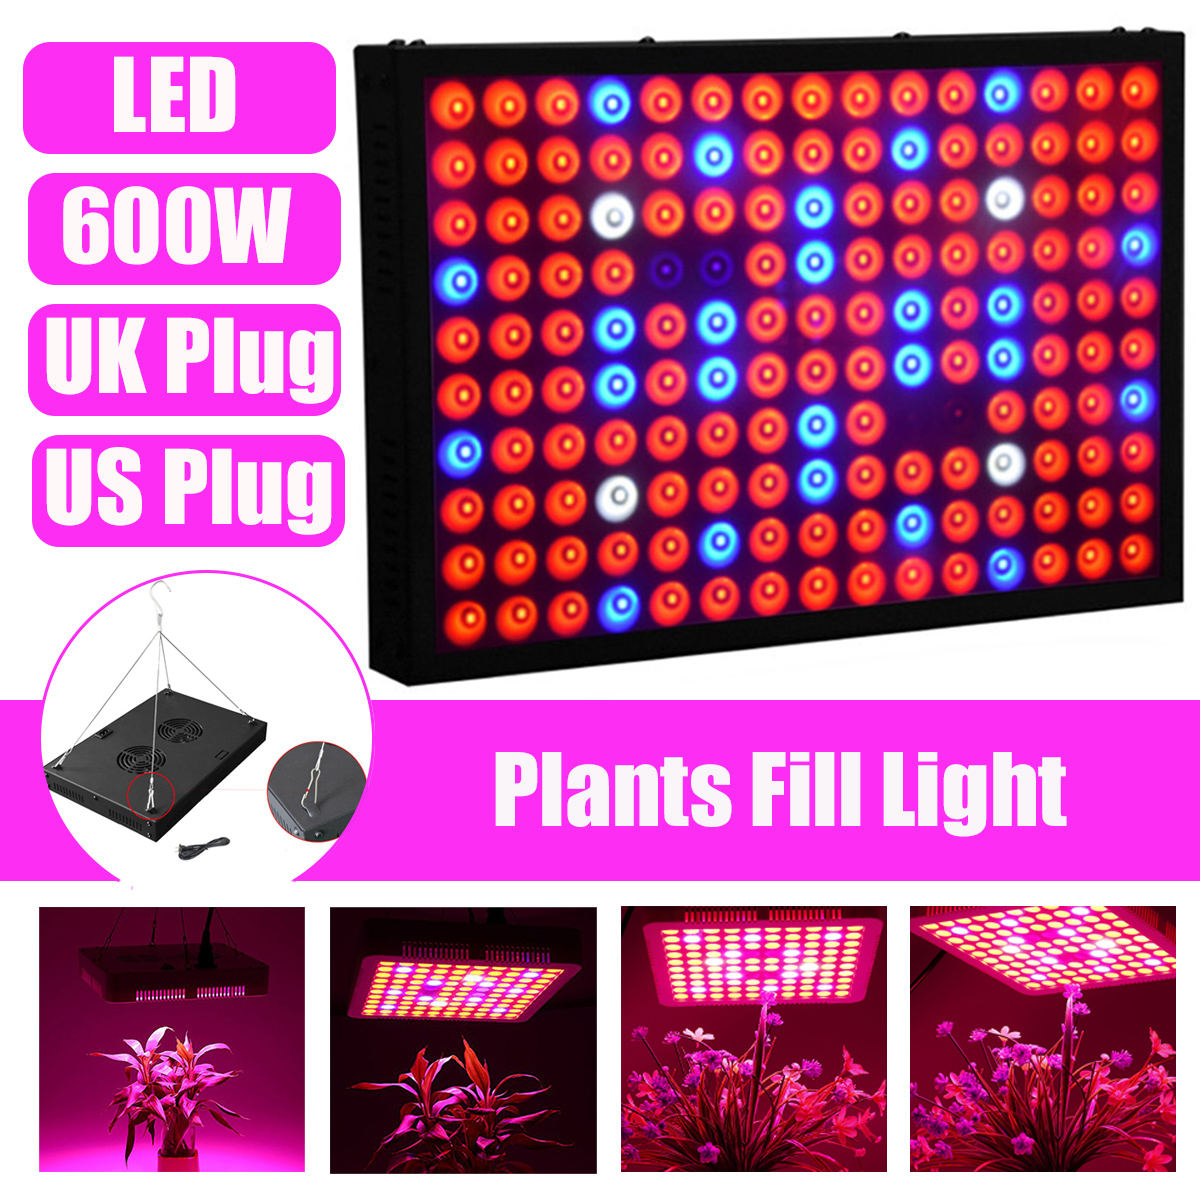 600W-Full-Spectrum-LED-Grow-Light-Hydroponic-Indoor-Veg-Flower-Plant-Panel-Lamp-1676213-1